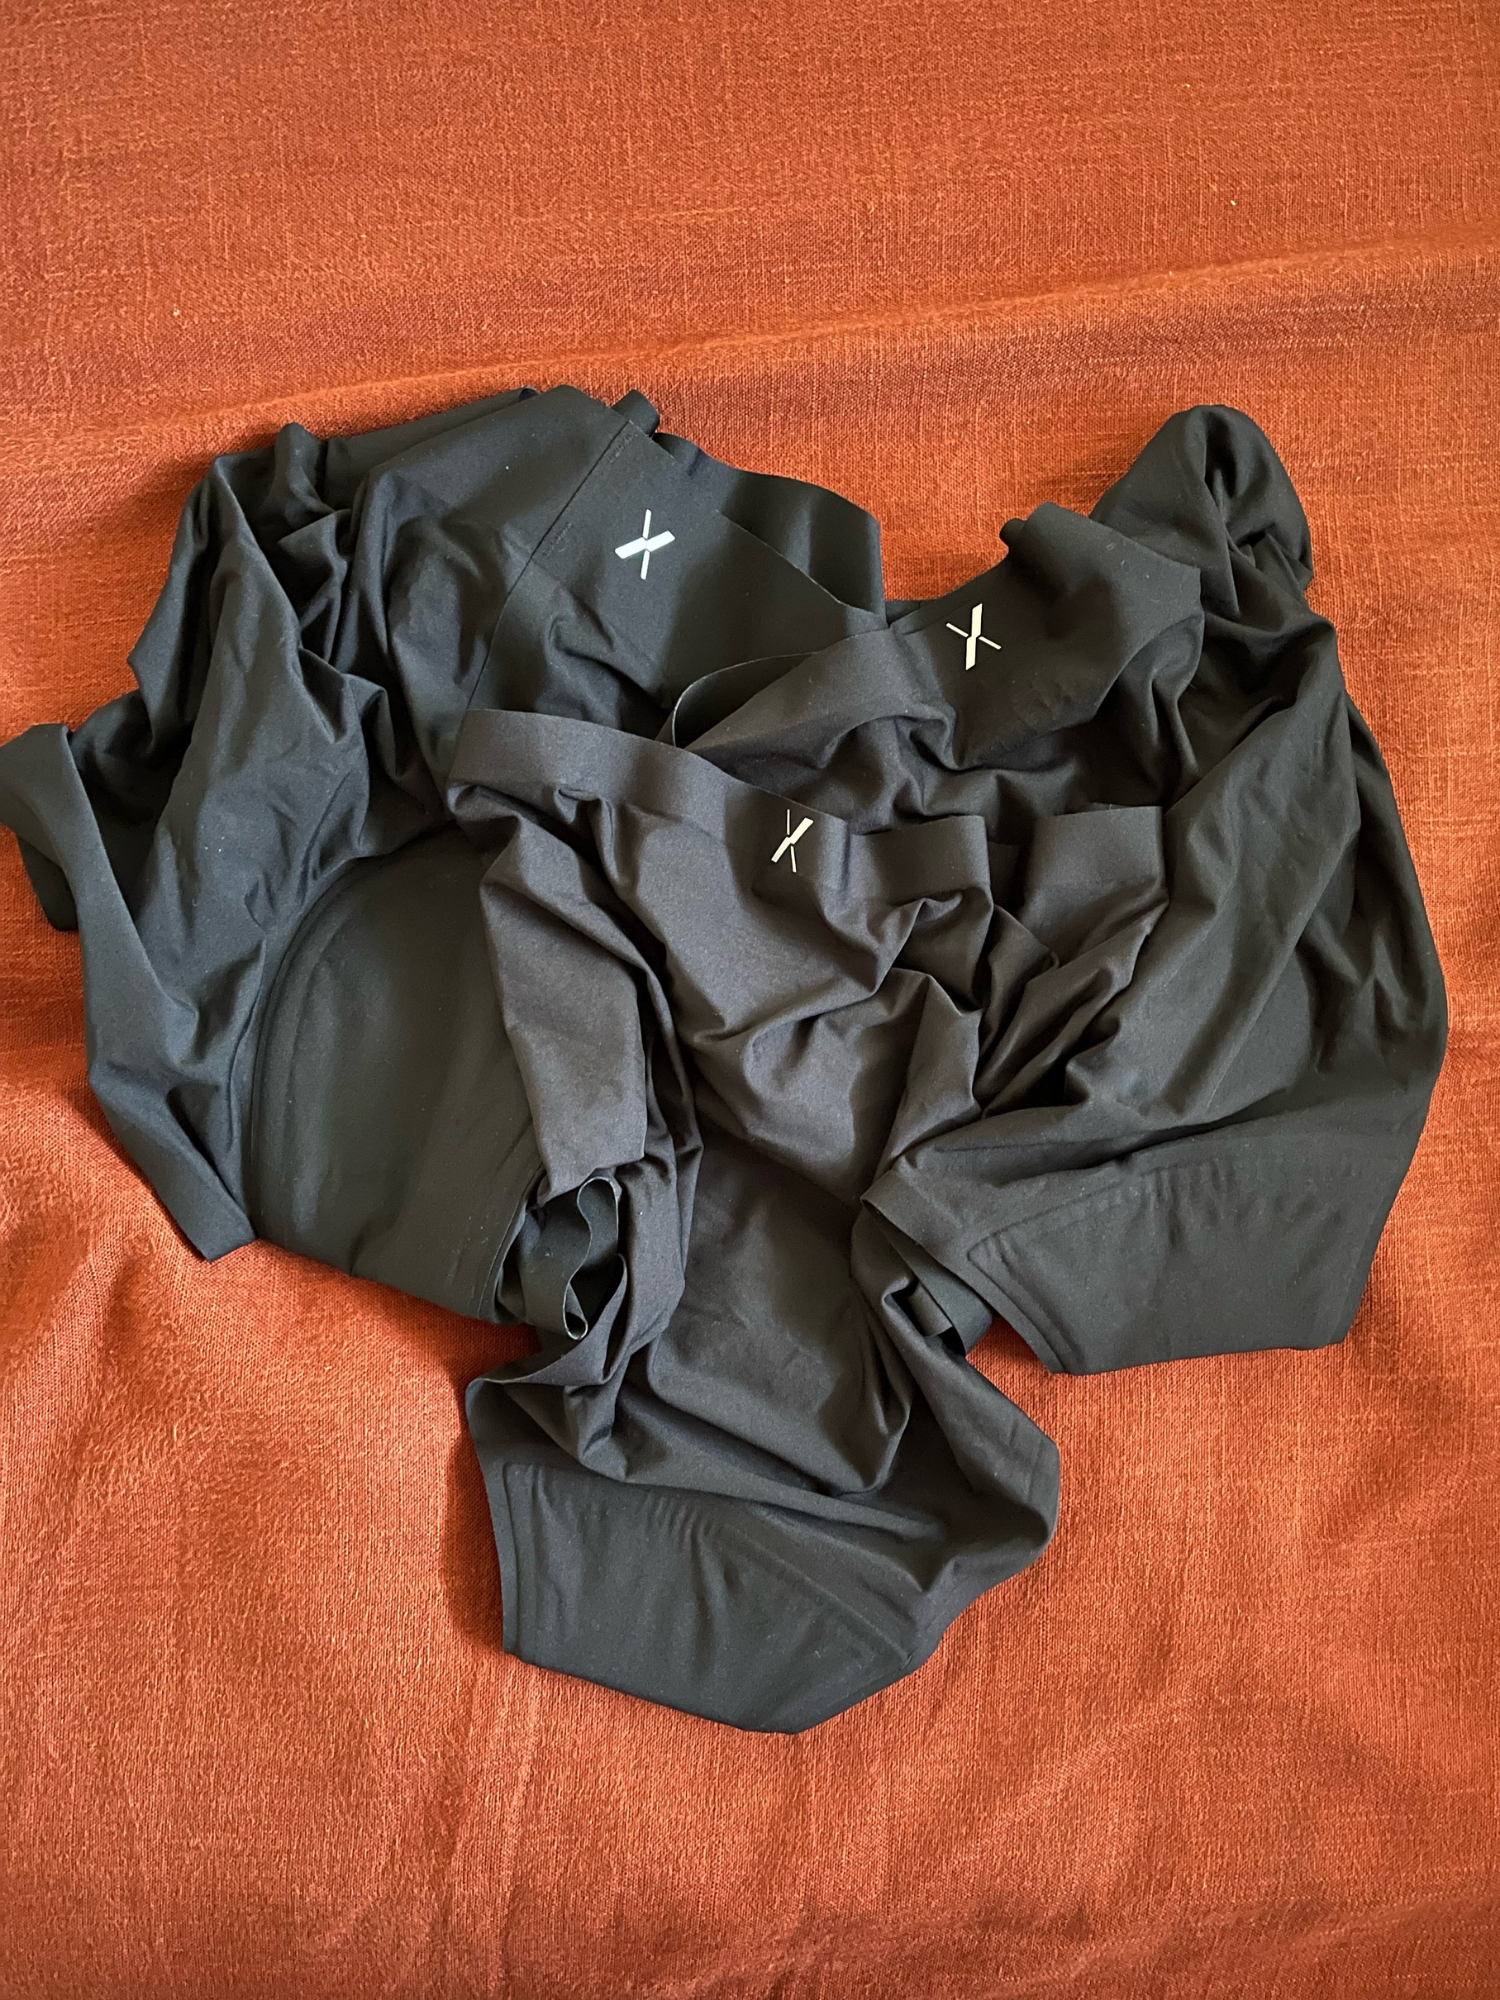 honest review of @knix leakproof period underwear 👀 #periodundies #pe